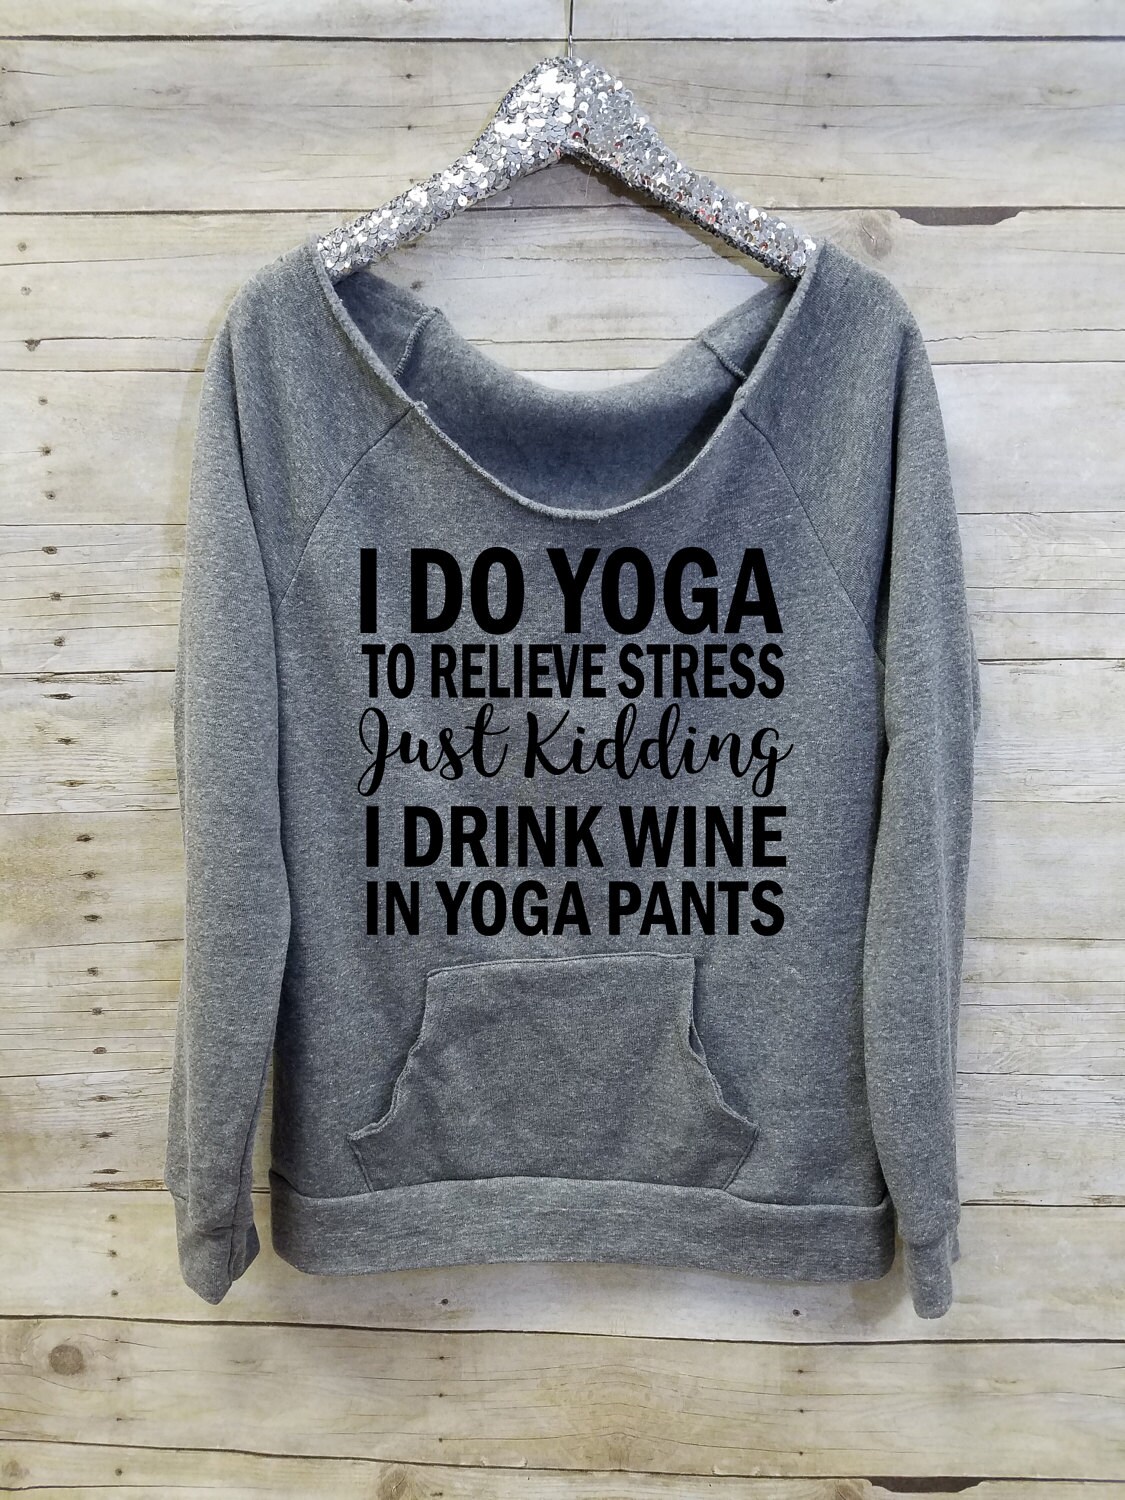 I Drink Wine in Yoga Pants, Funny Wine Drink Shirt, Comfy Wine Shirt